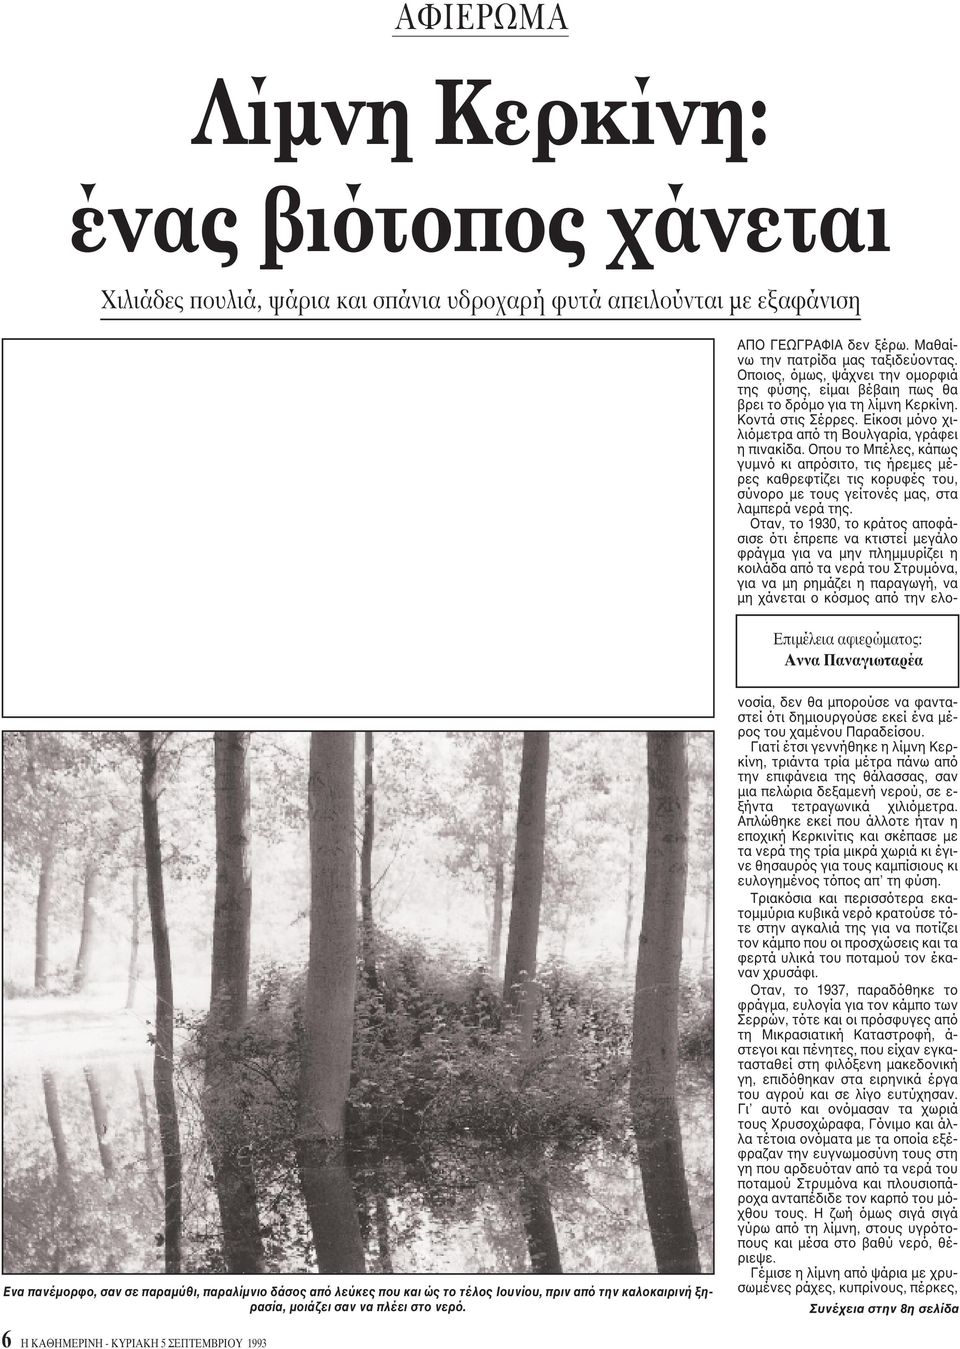 Oποιος, όμως, ψάχνει την ομορφιά της φύσης, είμαι βέβαιη πως θα βρει το δρόμο για τη λίμνη Kερκίνη. Kοντά στις Σέρρες. Eίκοσι μόνο χιλιόμετρα από τη Bουλγαρία, γράφει η πινακίδα.